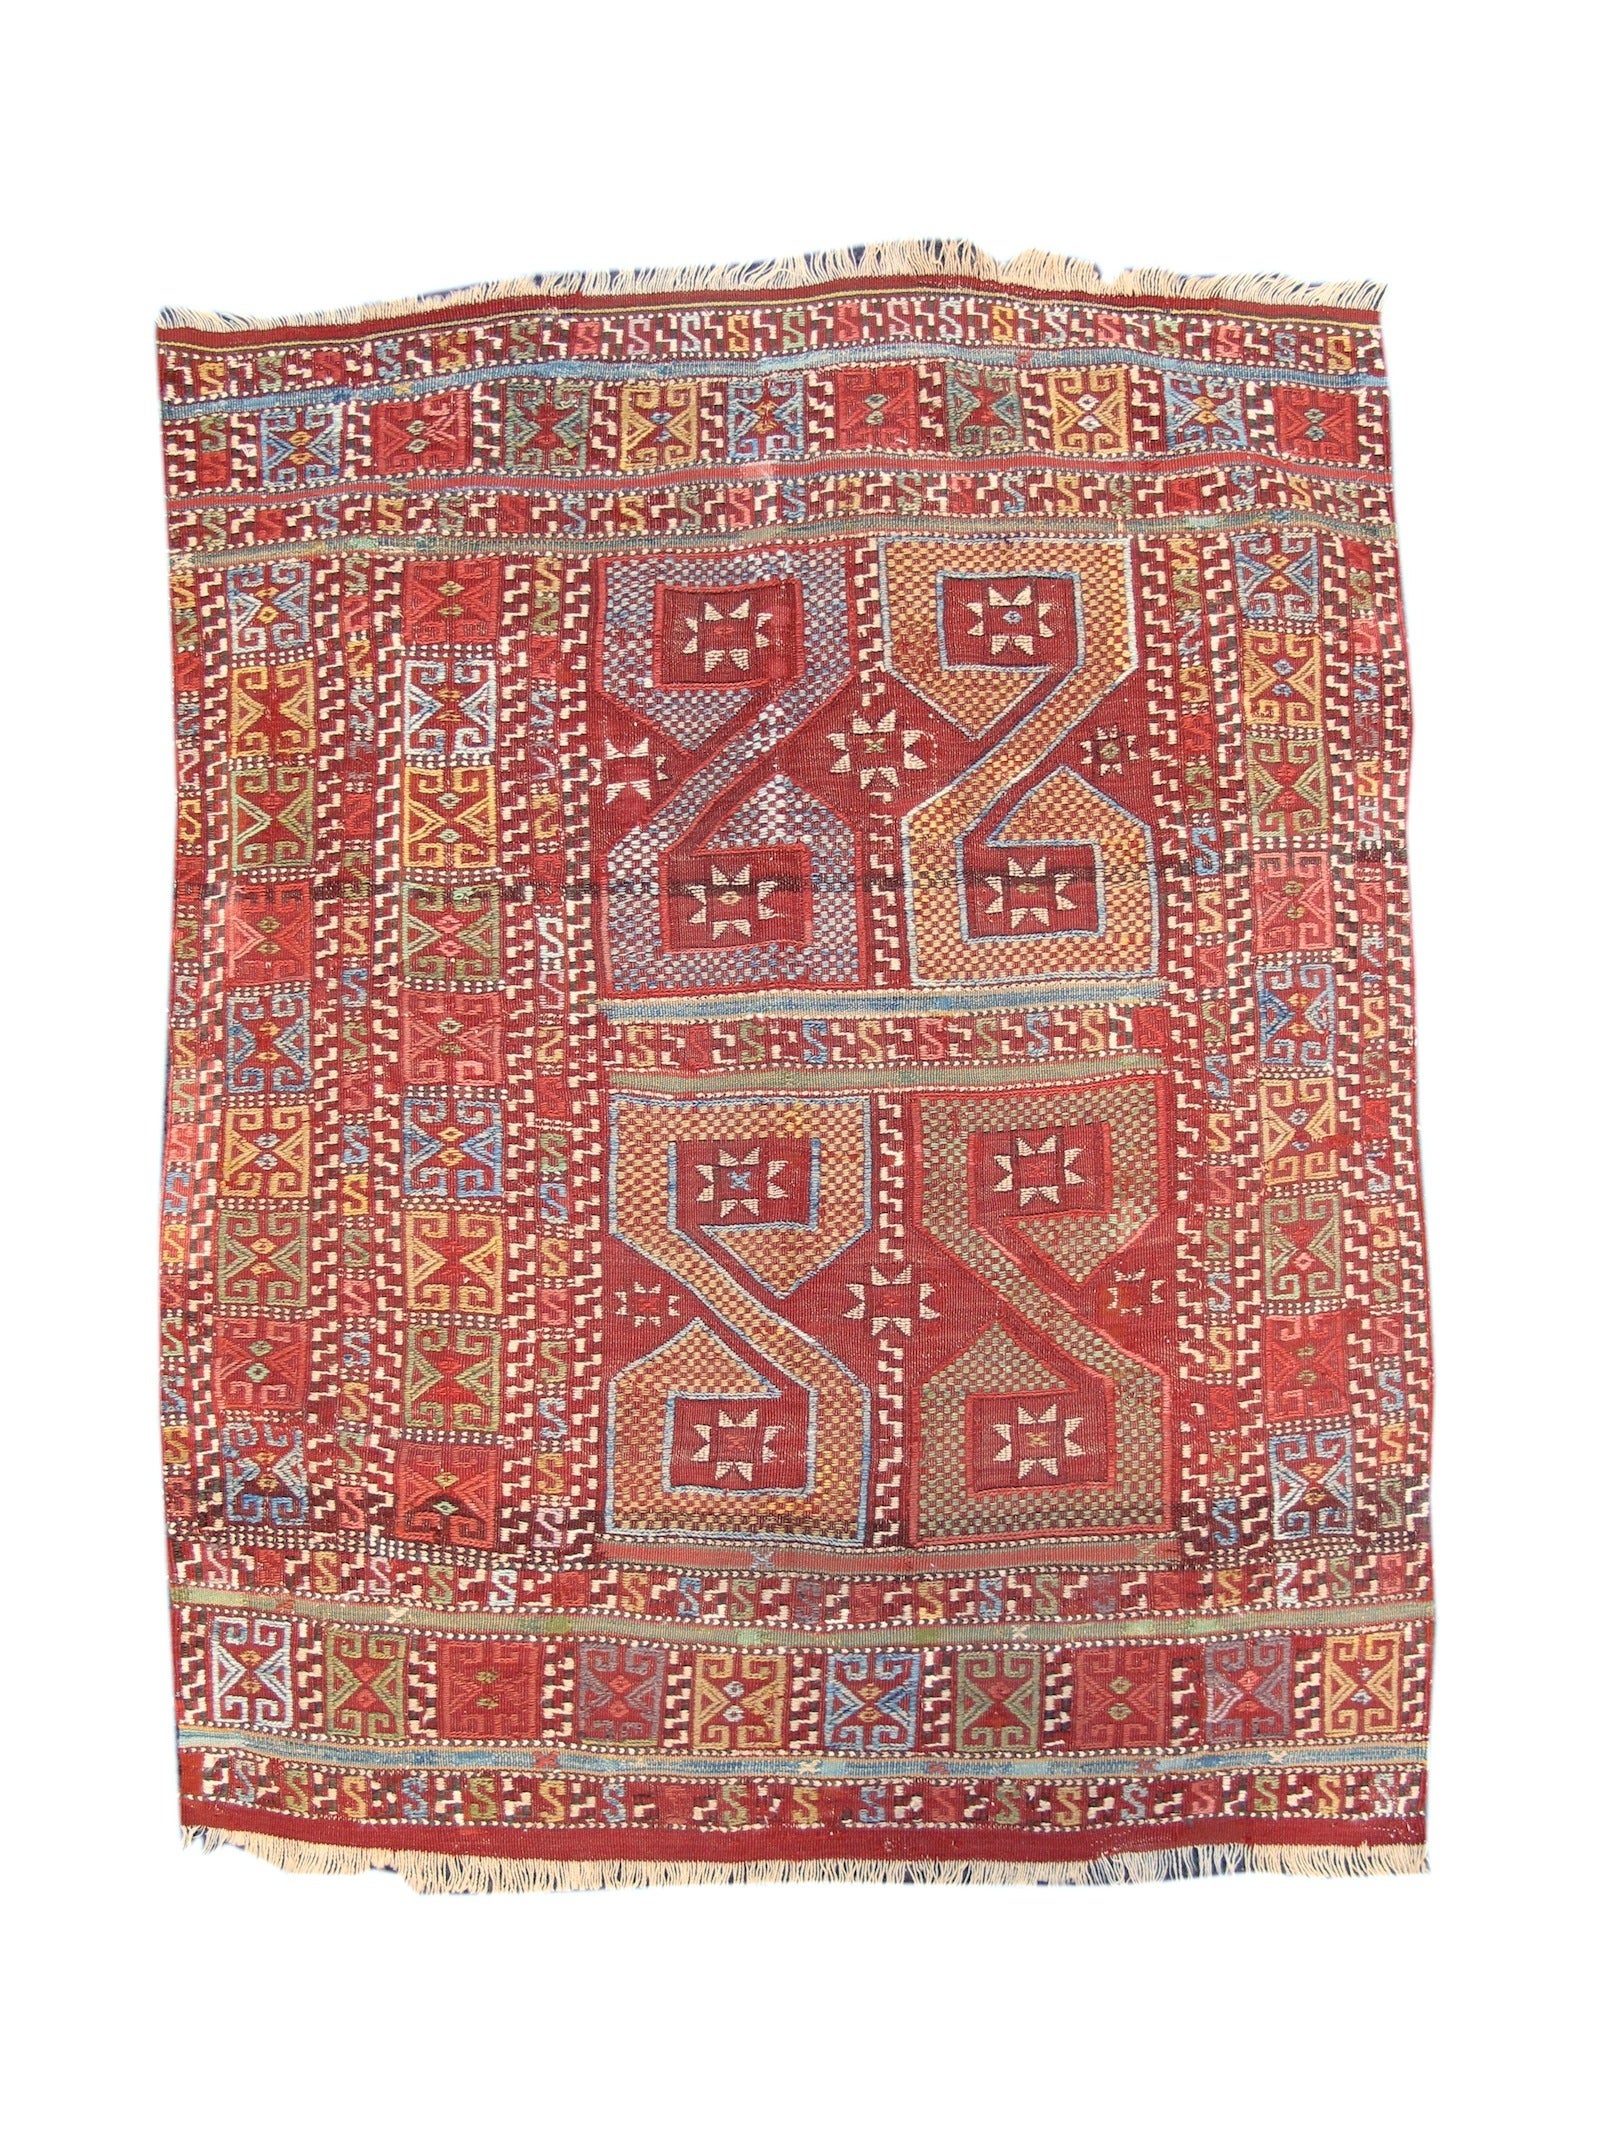 Antique Red Turkish Jajim Flat-Weave Rug, Mid-19th Century 